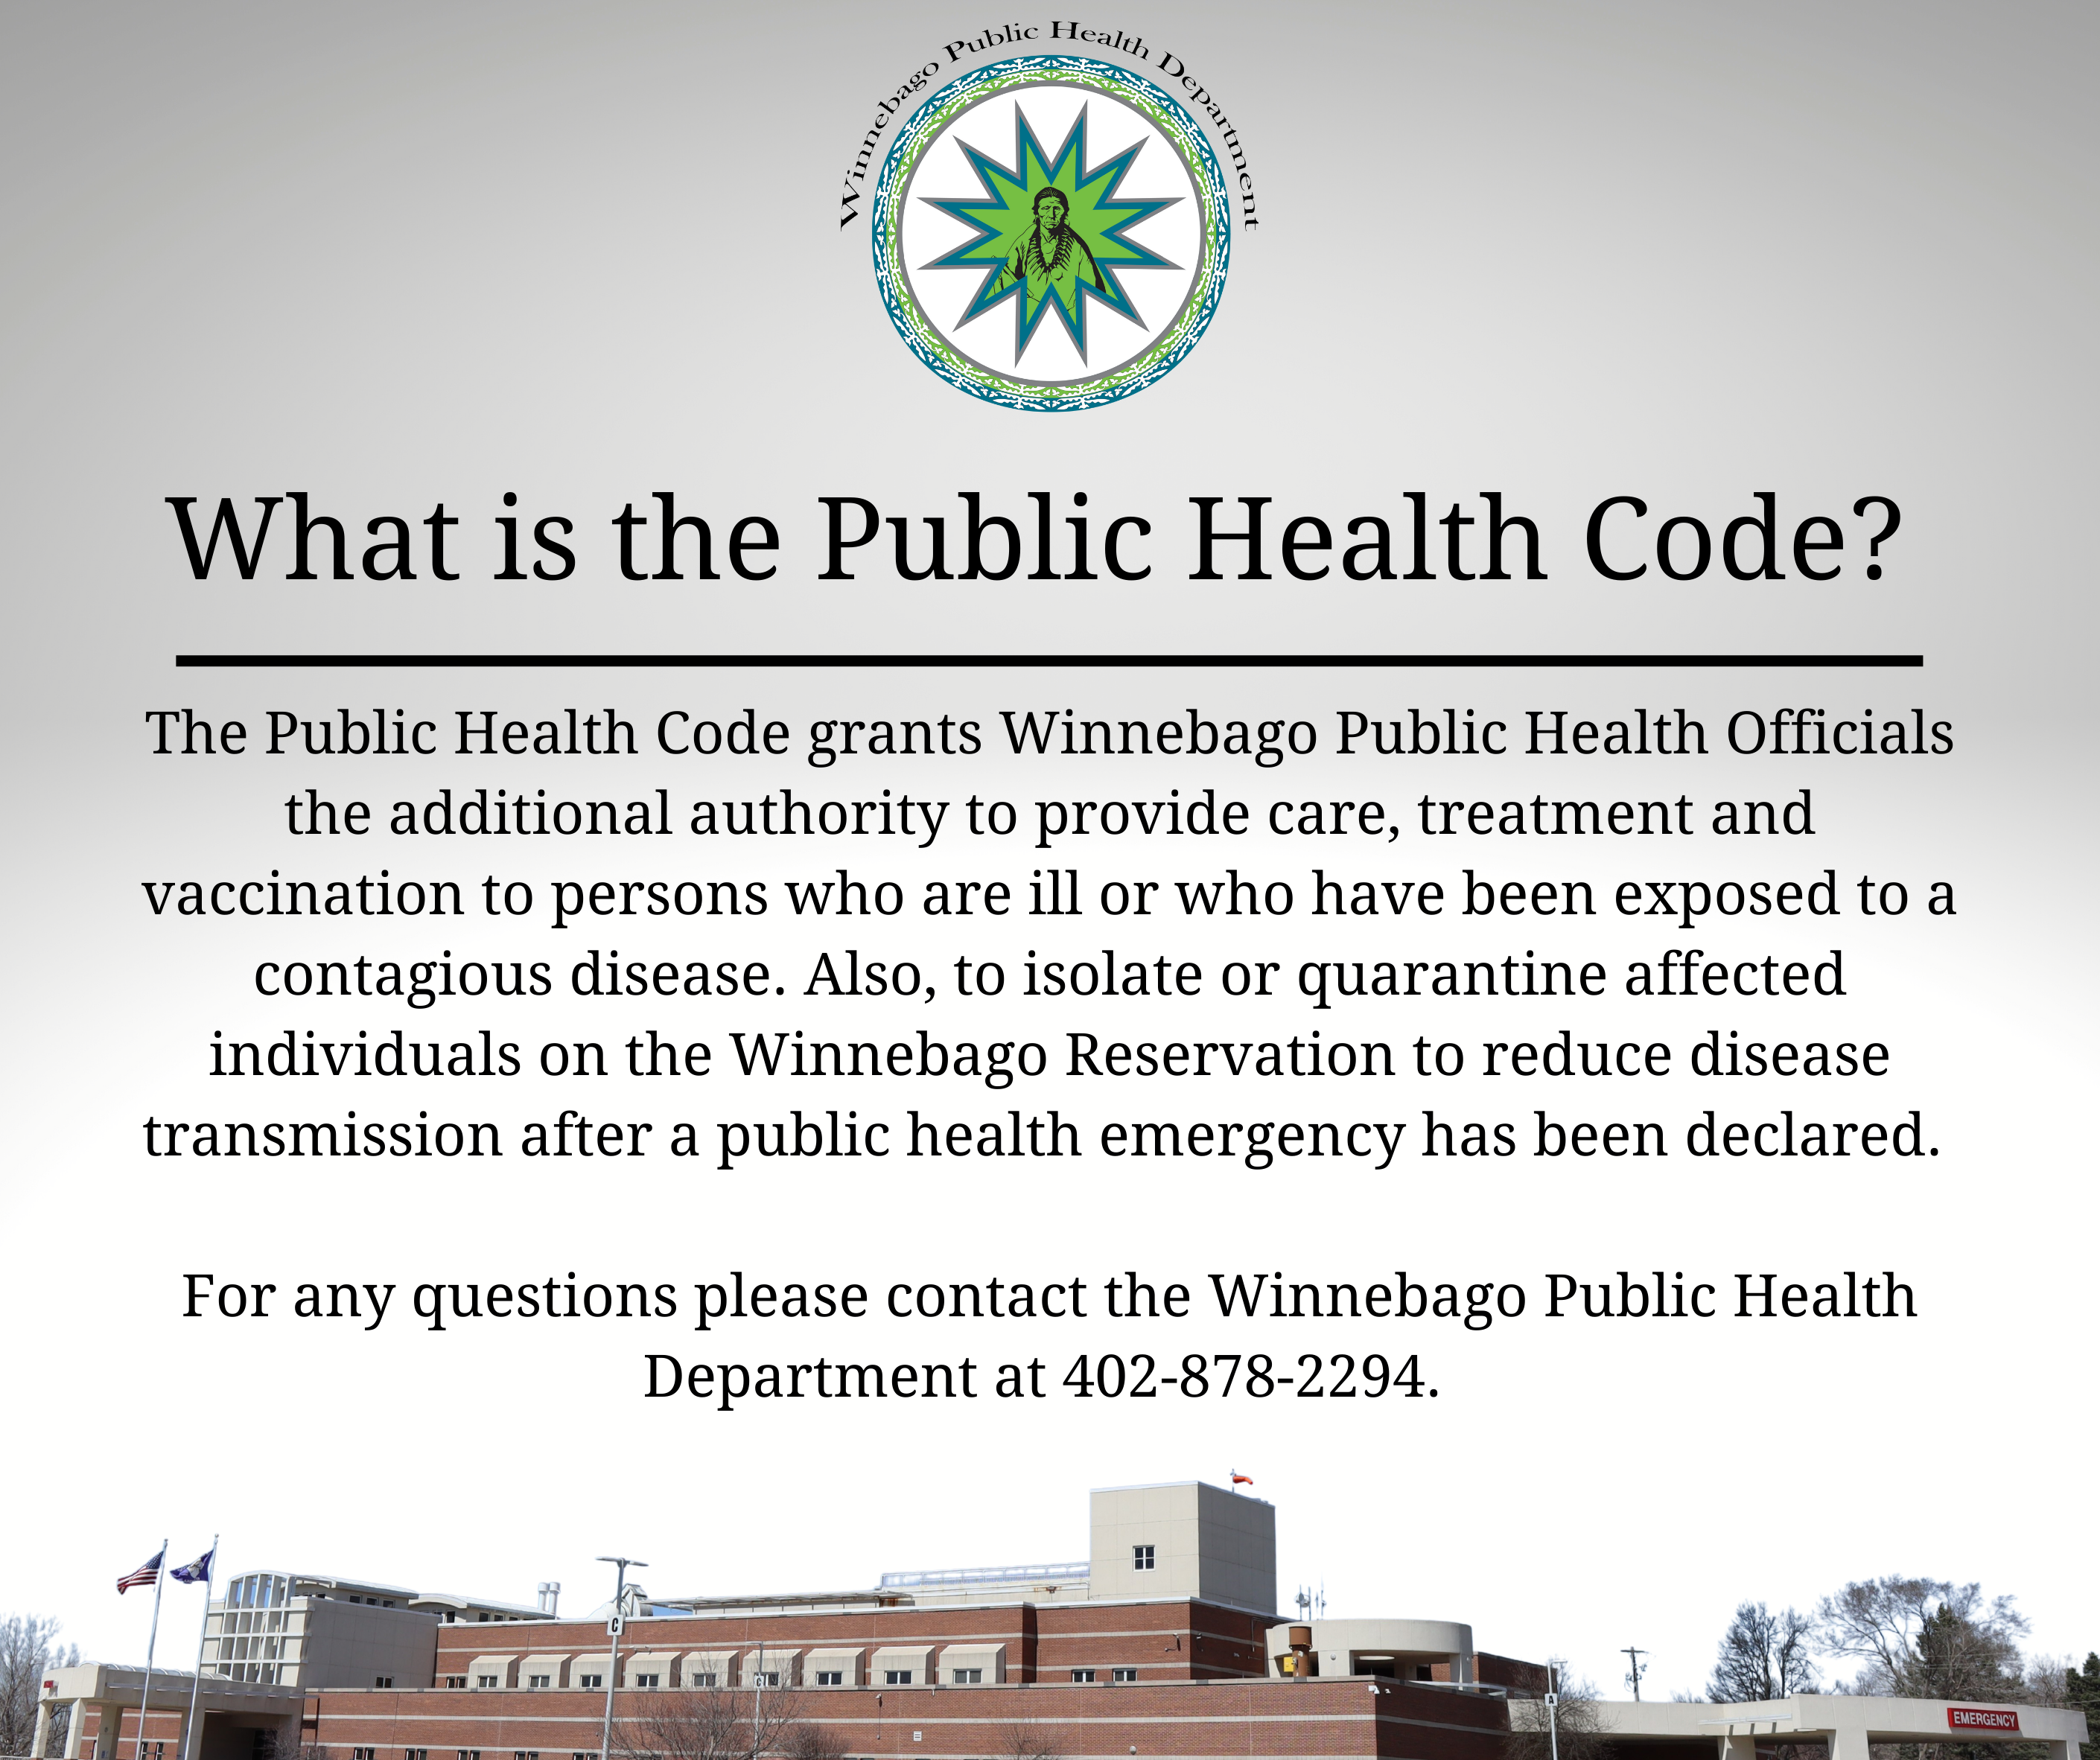 https://winnebagopublichealth.com/wp-content/uploads/2022/08/Public-Health-Code-8-2-22.png